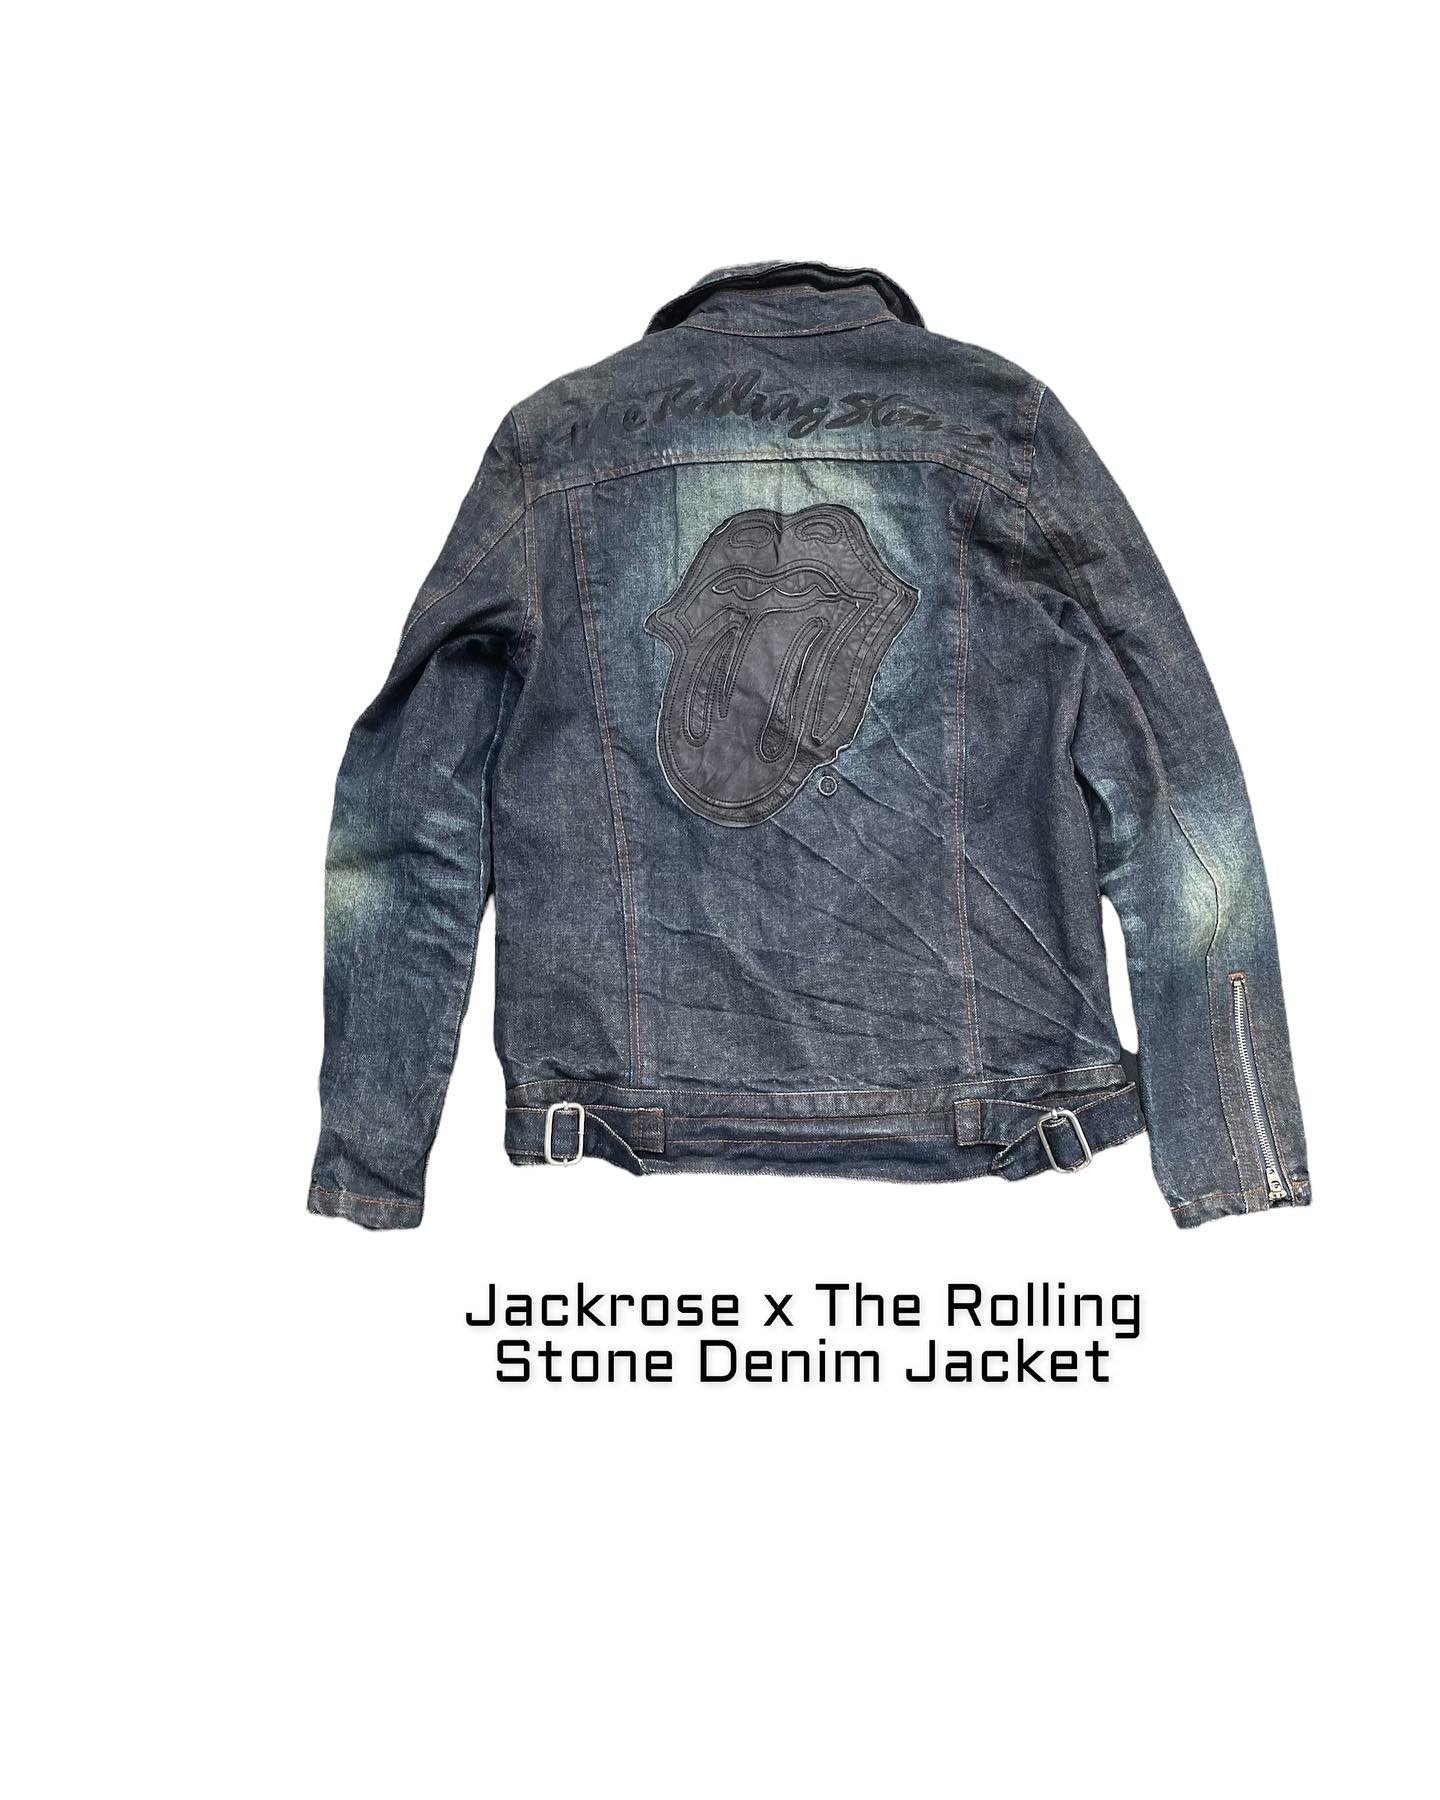 Jackrose x The Rolling Stones Denim Jacket